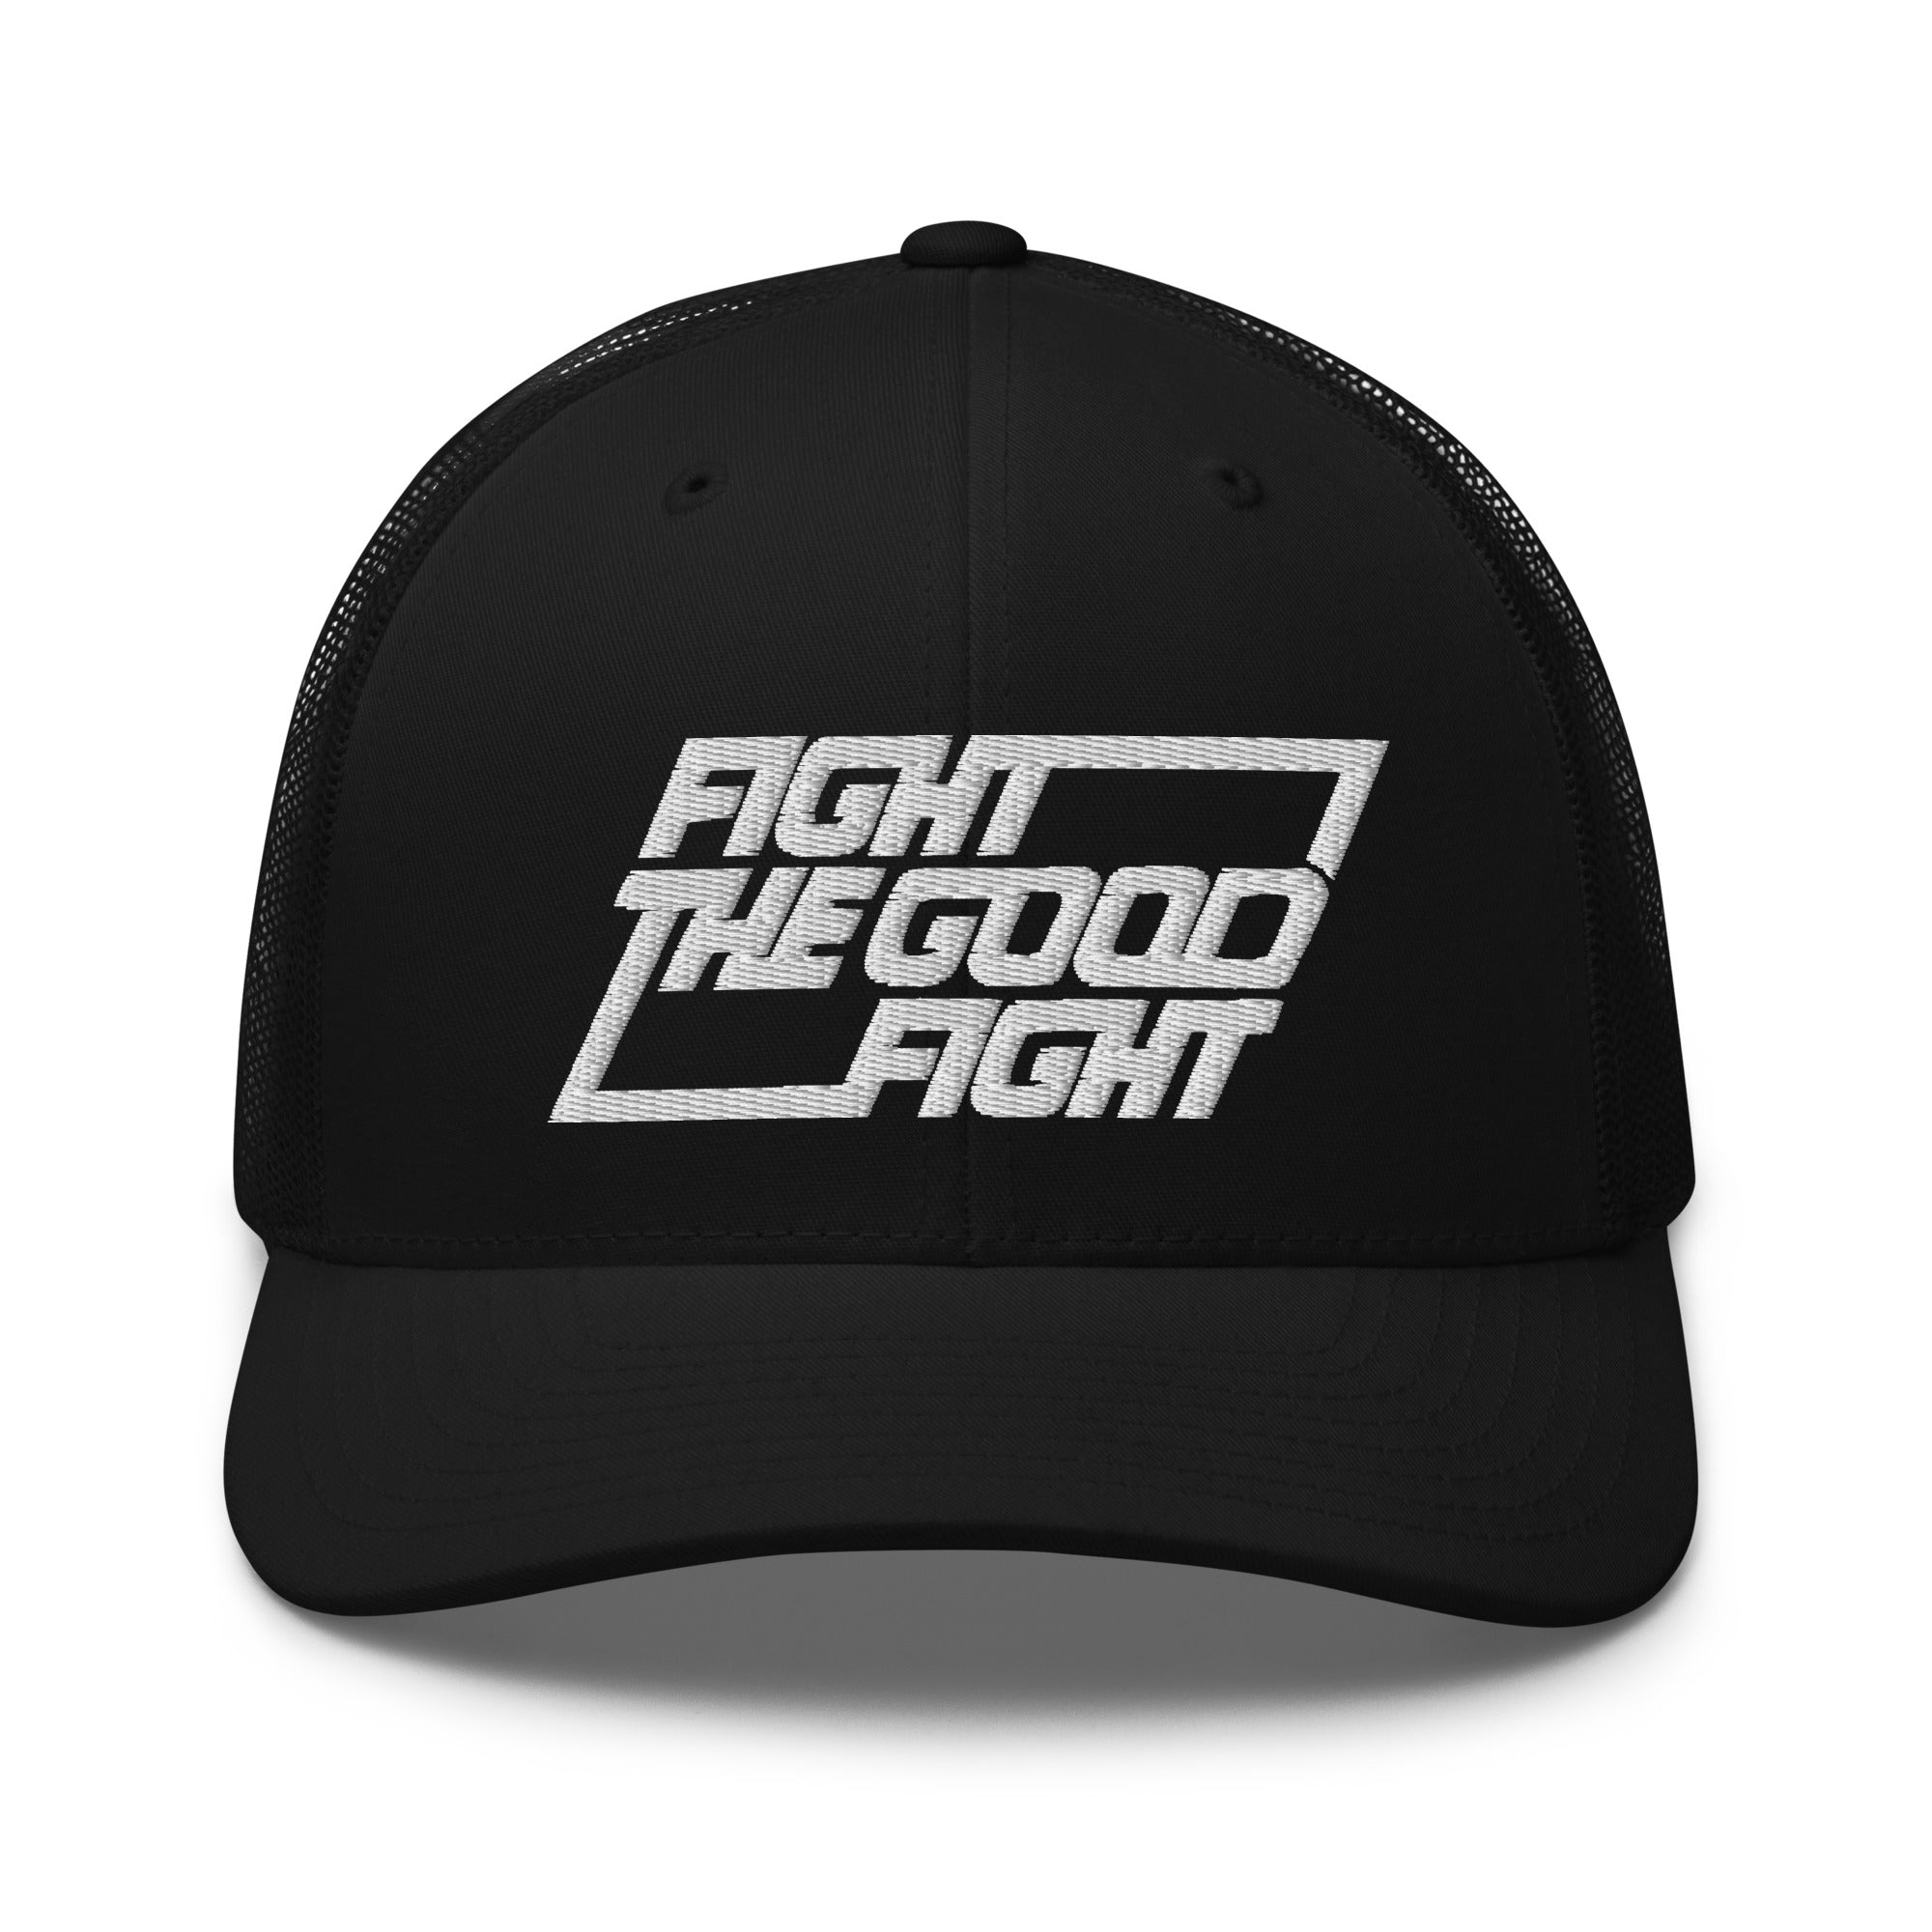 Fight the Good Fight Trucker Cap